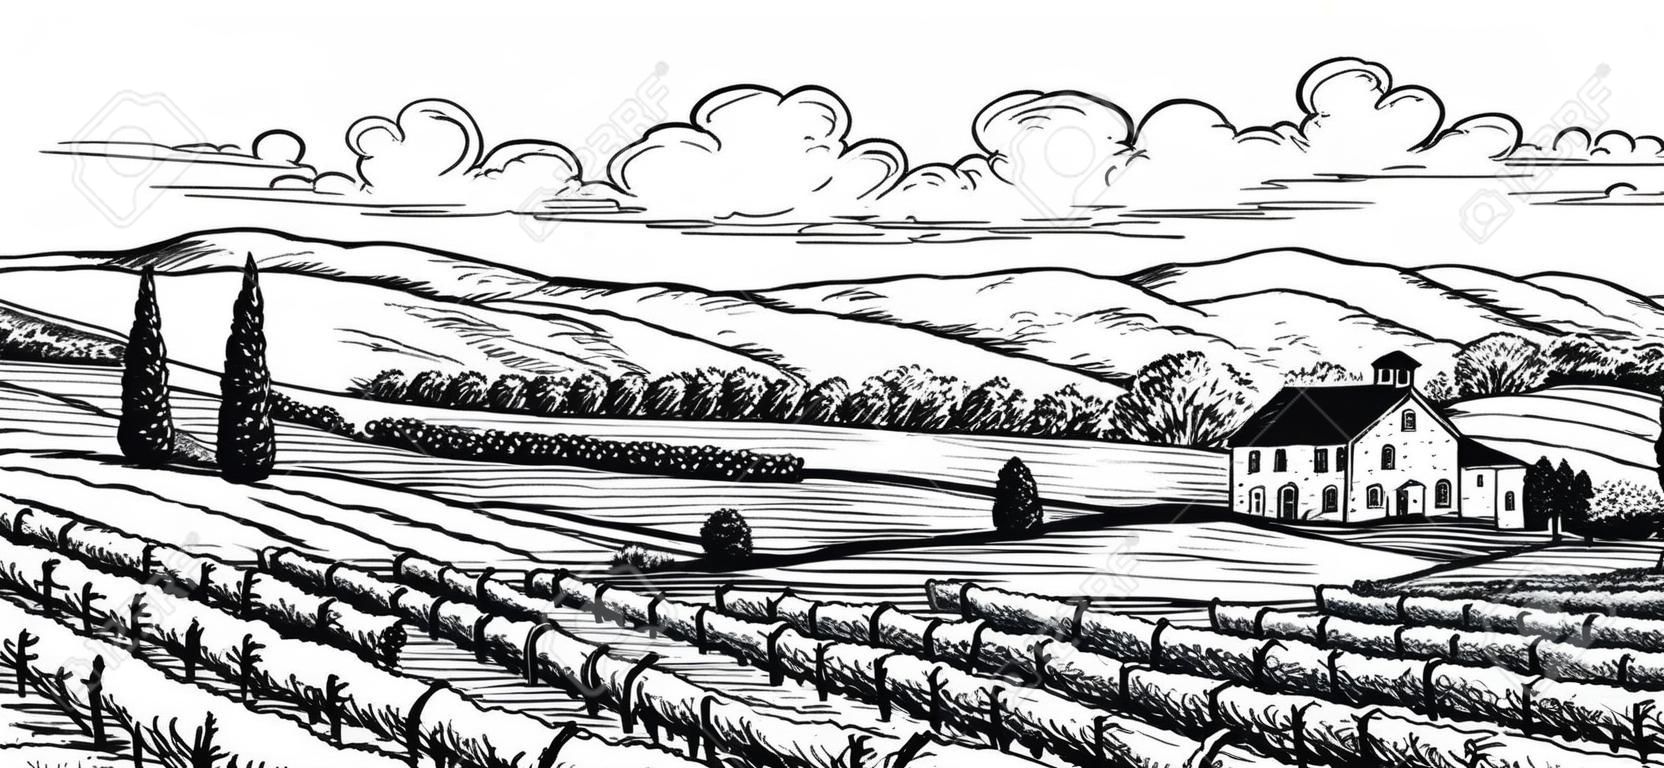 Hand drawn vineyard landscape. Isolated on white background. Vintage style vector illustration.